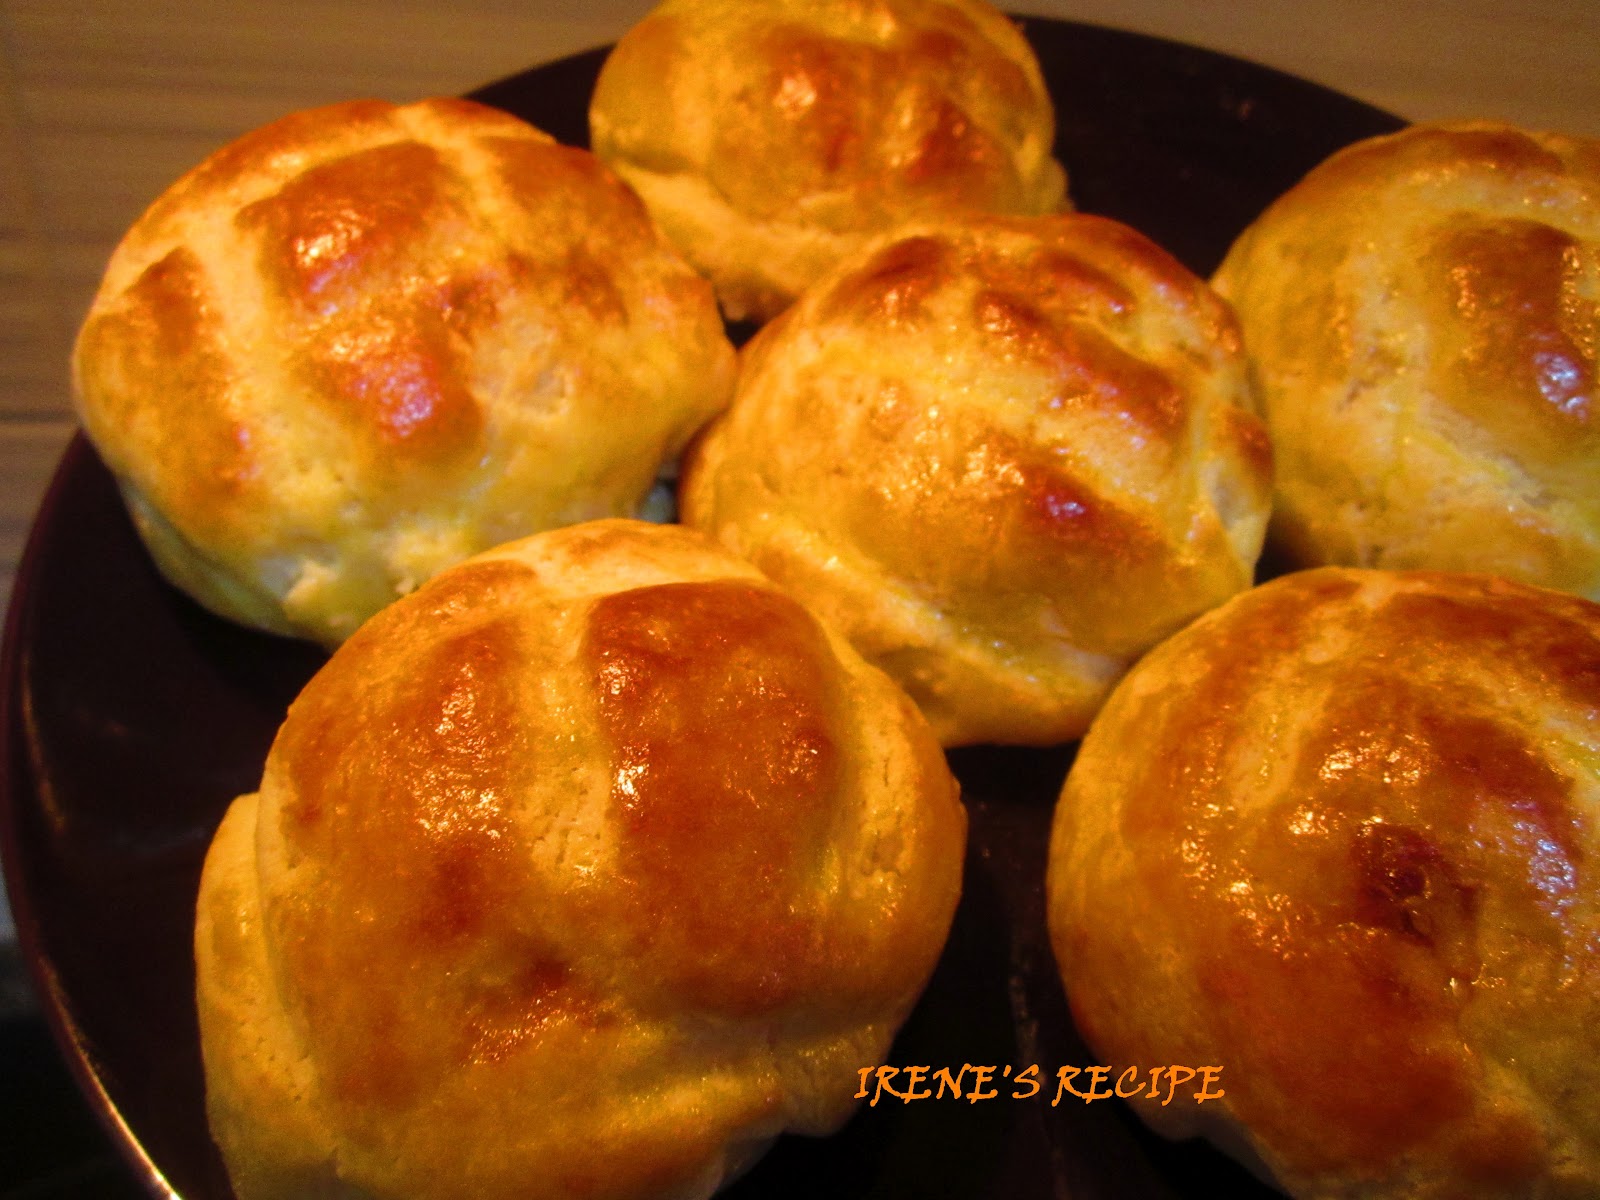 Irene's Recipe: Pineapple Bun - Polo Bread